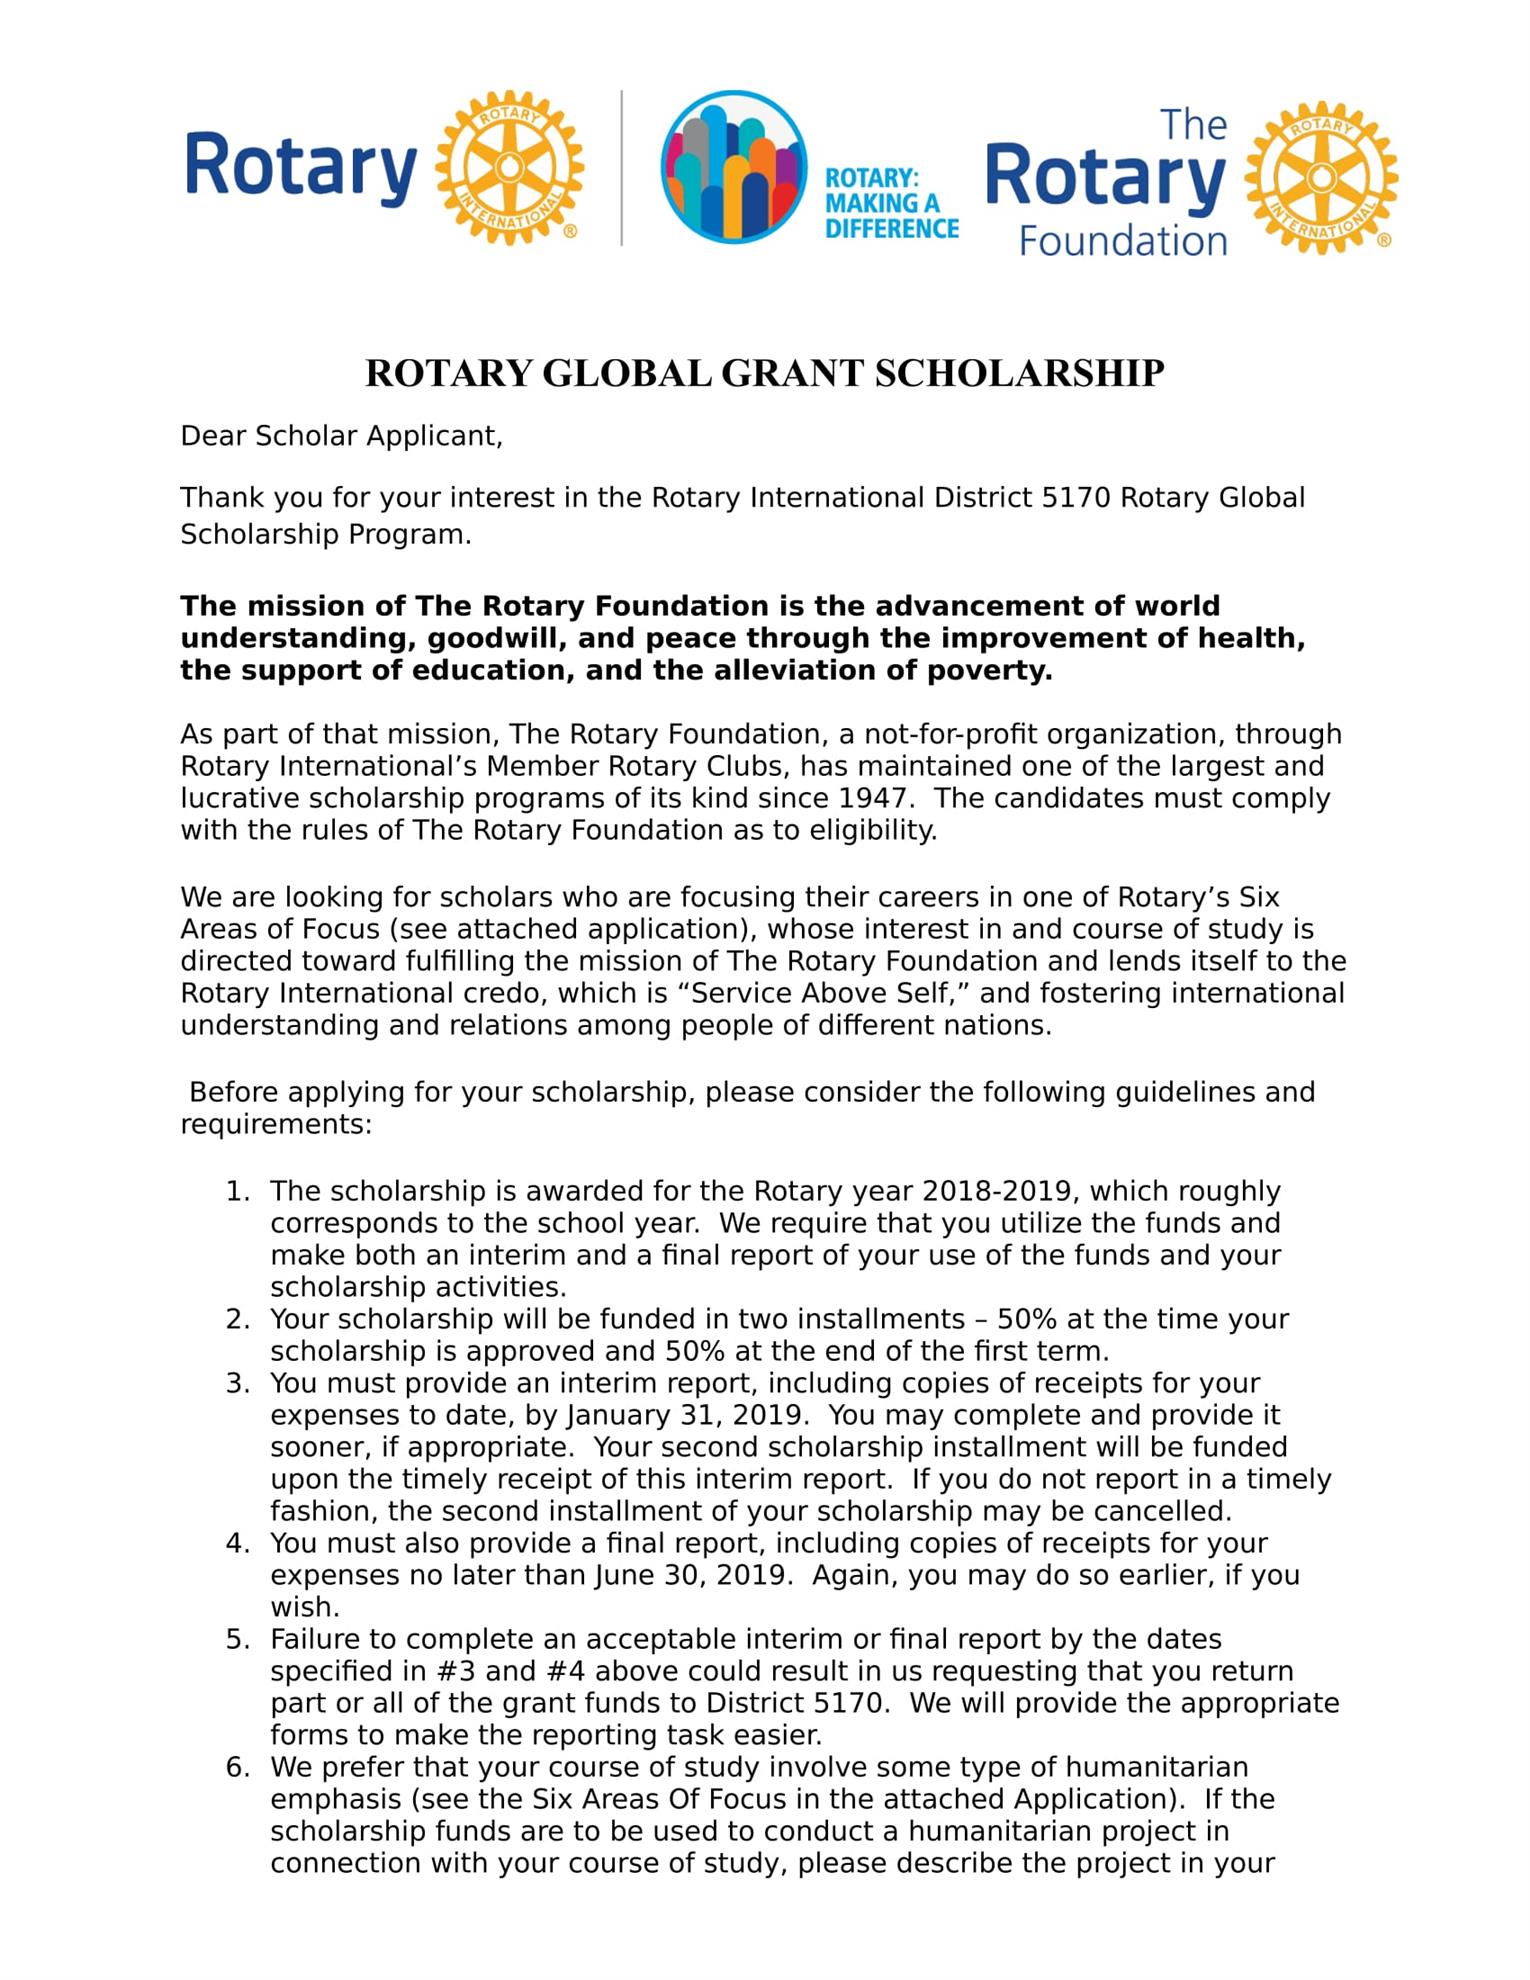 Global_Grant_Scholarship | Rotary Club of Pleasanton North